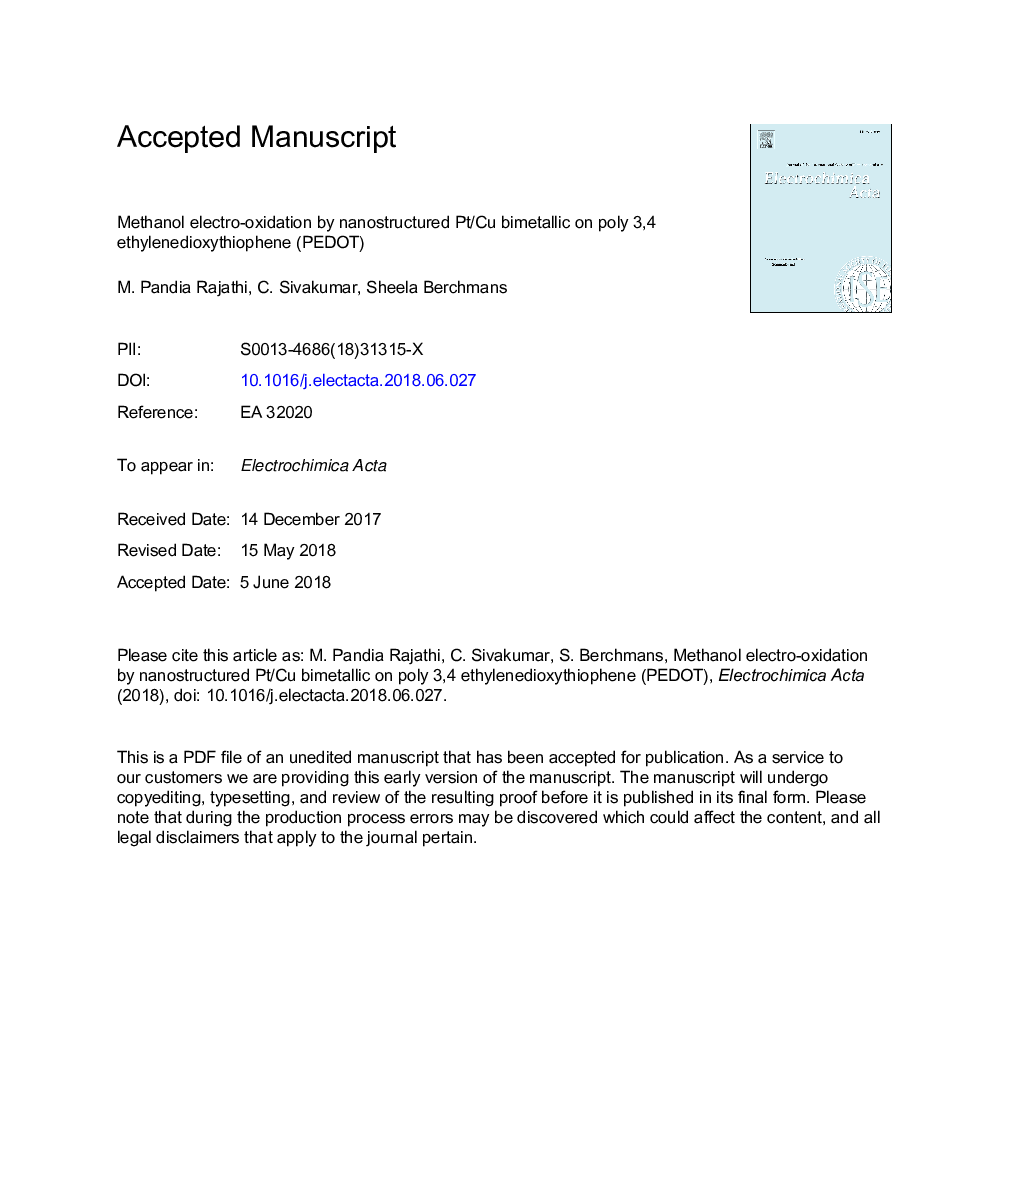 Methanol electro-oxidation by nanostructured Pt/Cu bimetallic on poly 3,4 ethylenedioxythiophene (PEDOT)